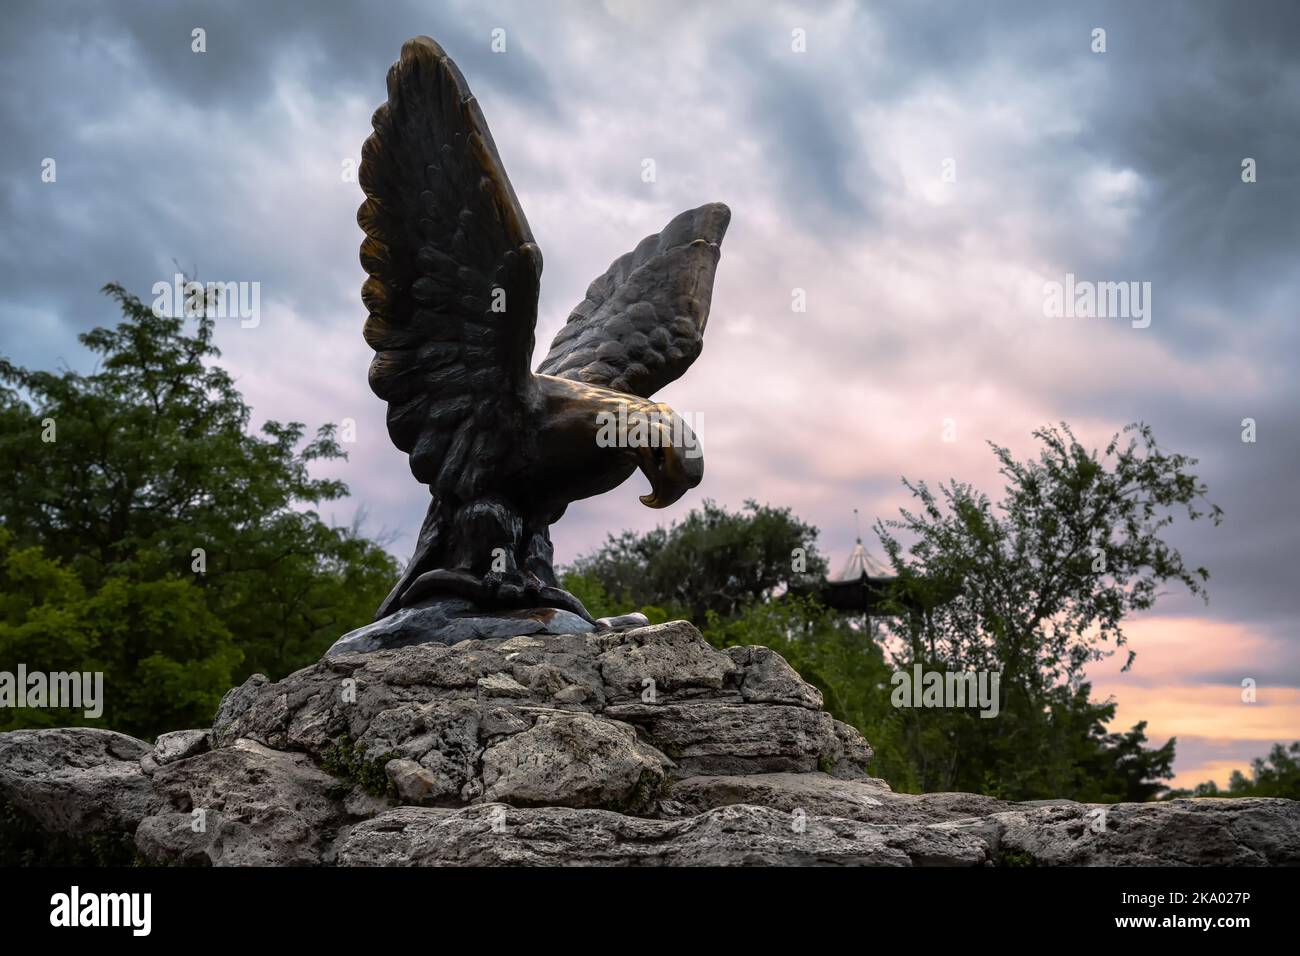 Eagle statue at sunset, Pyatigorsk, Stavropol Krai, Russia. Scenery of historical city landmark, old symbol of Pyatigorsk installed in 1901. Monument Stock Photo